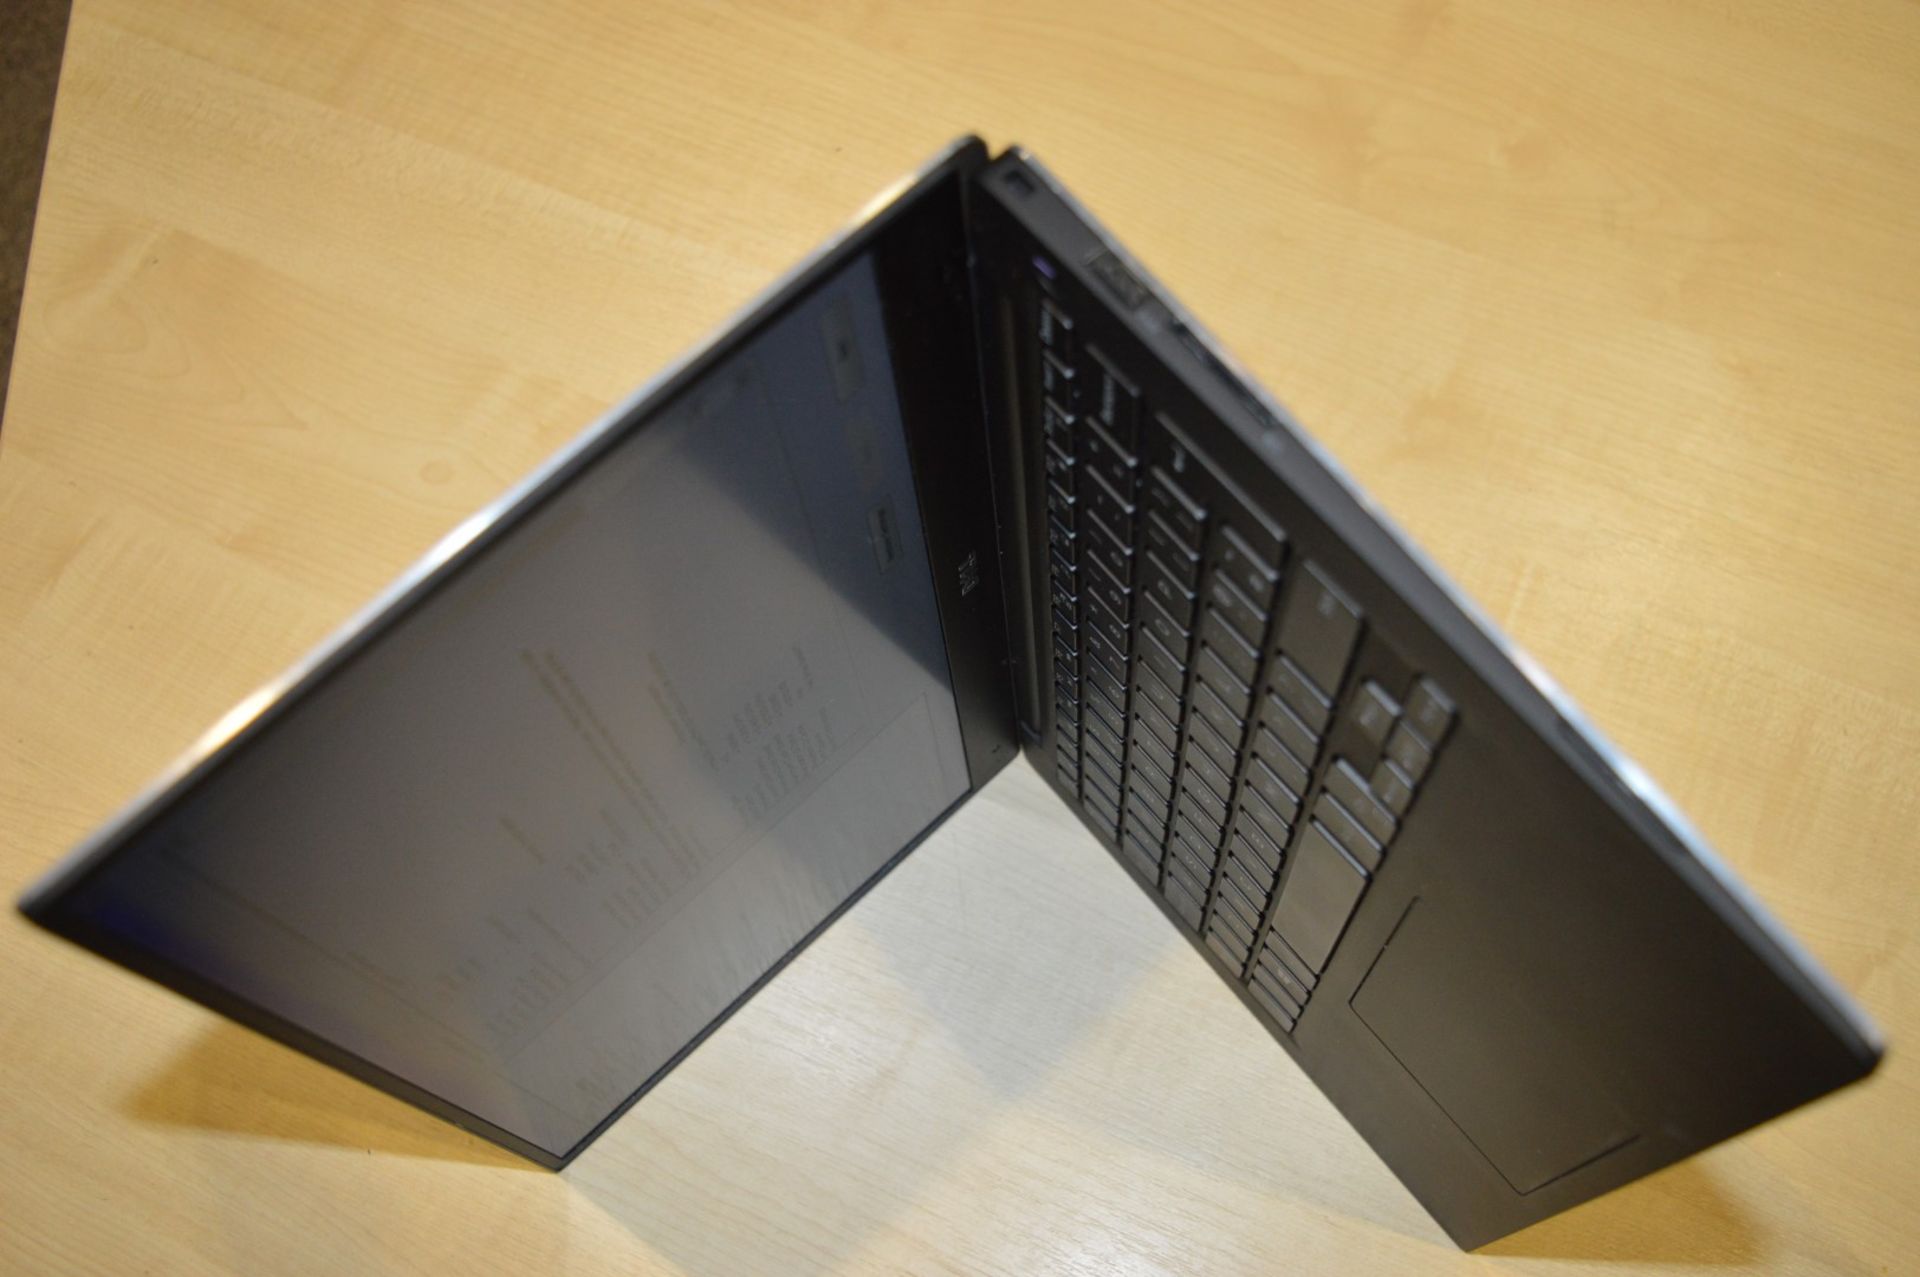 1 x Dell XPS 13 9360 13.3 Inch Ultrabook - Features Full HD Screen, Intel Core i5-7200U 7th Gen 2. - Image 11 of 16